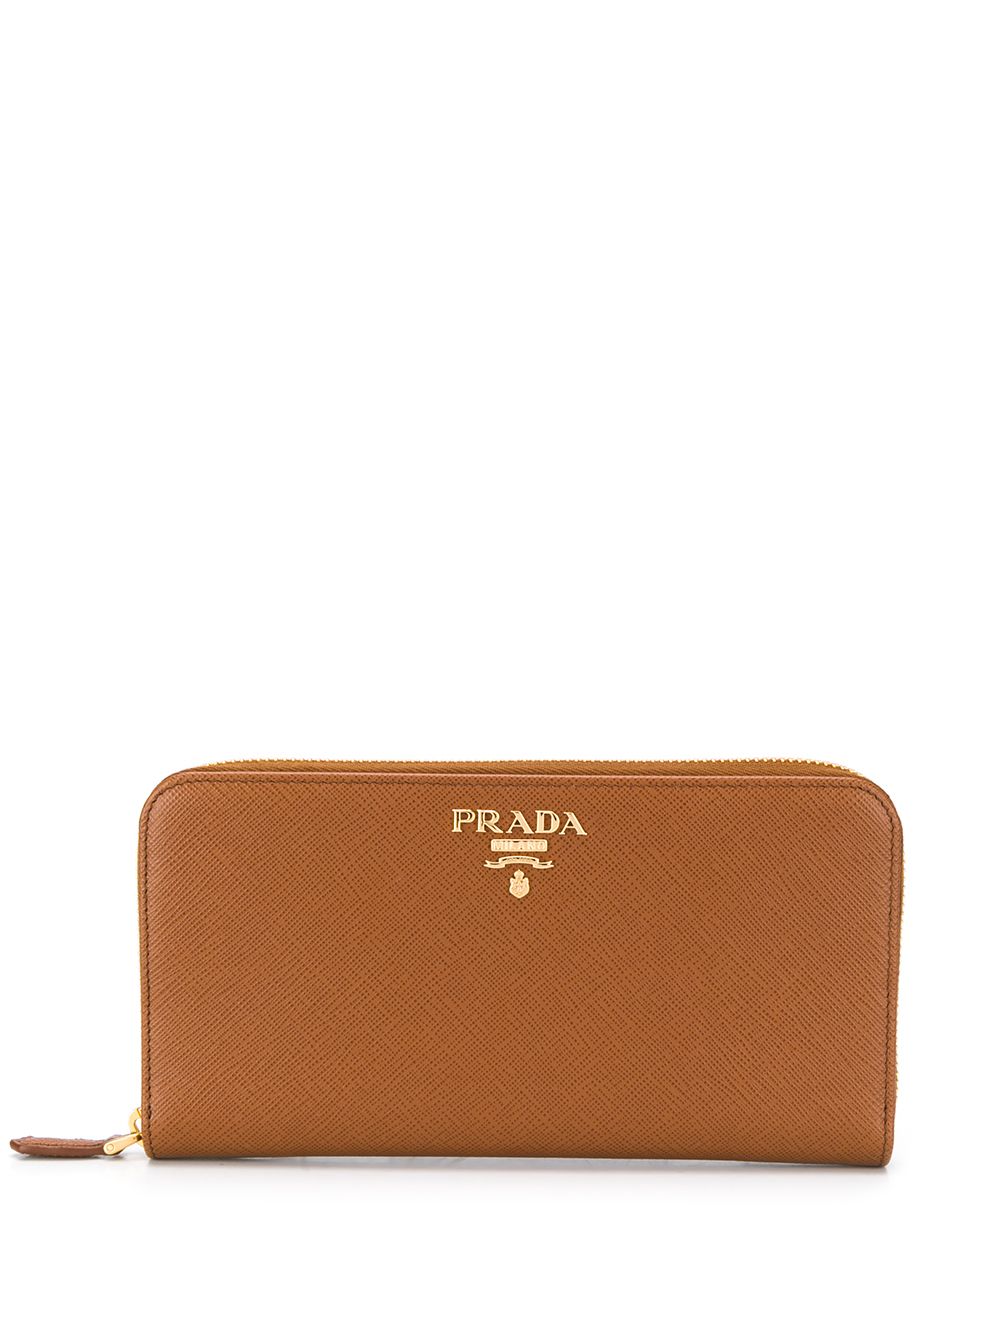 фото Prada кошелек с логотипом